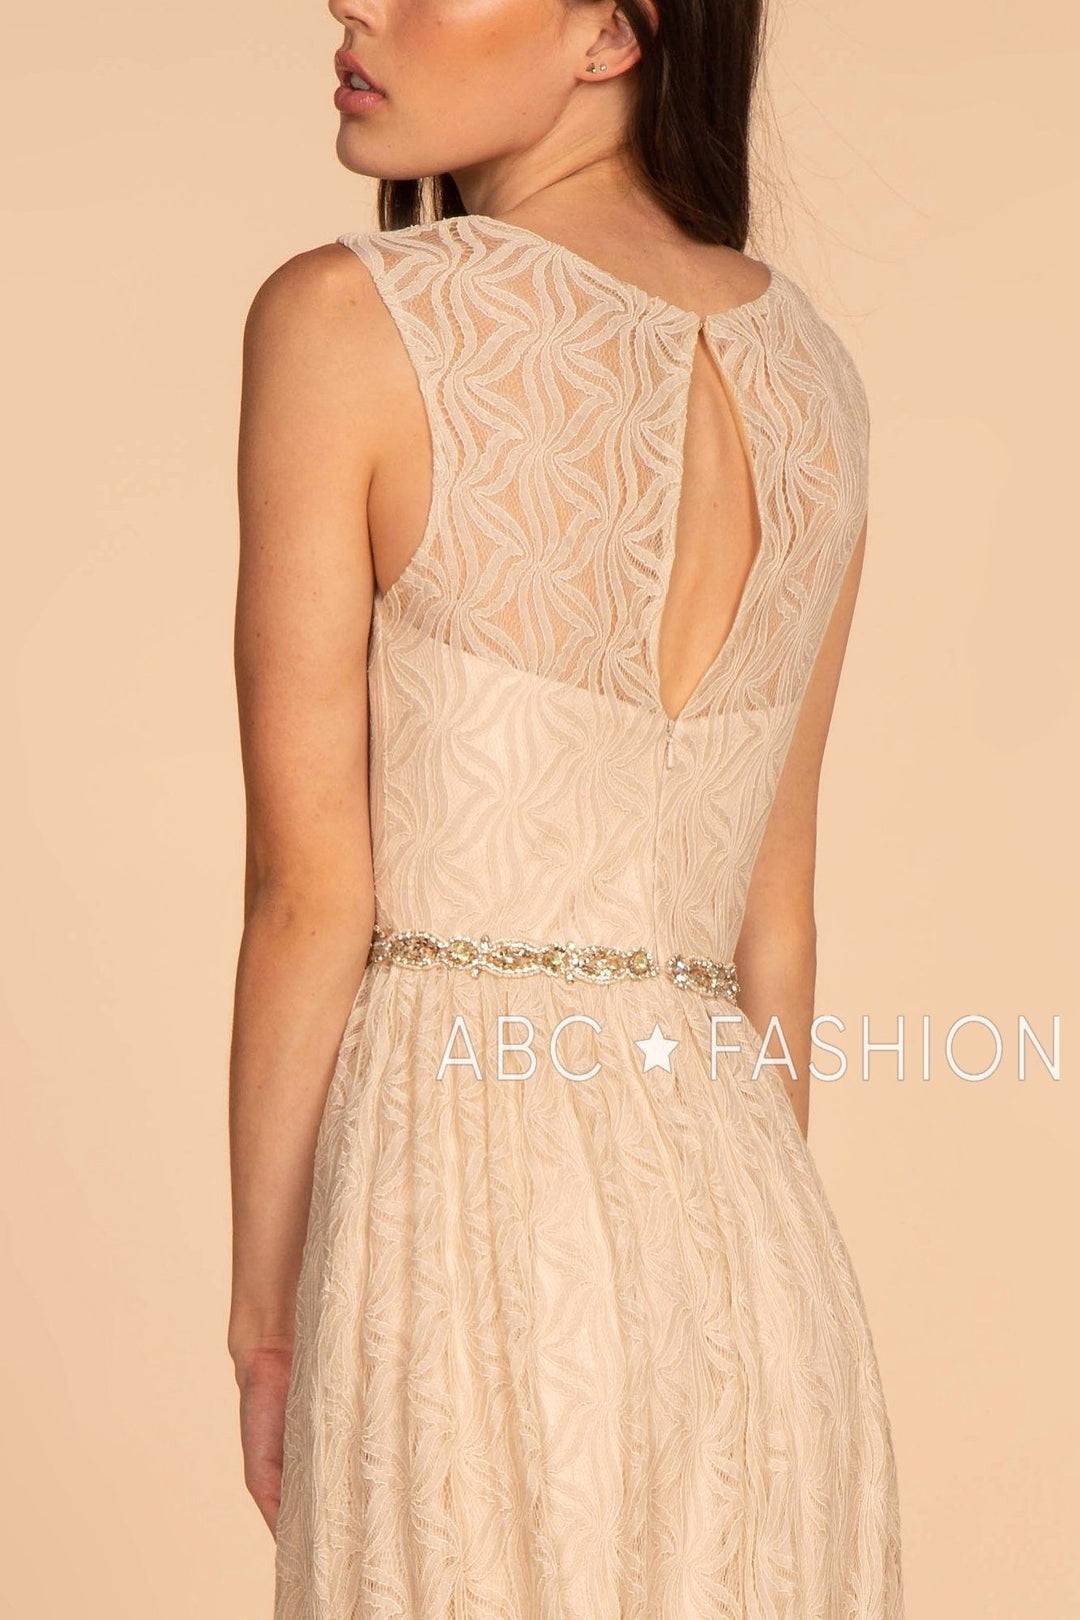 Long Lace Dress with Jeweled Waistband by Elizabeth K GL2611-Long Formal Dresses-ABC Fashion